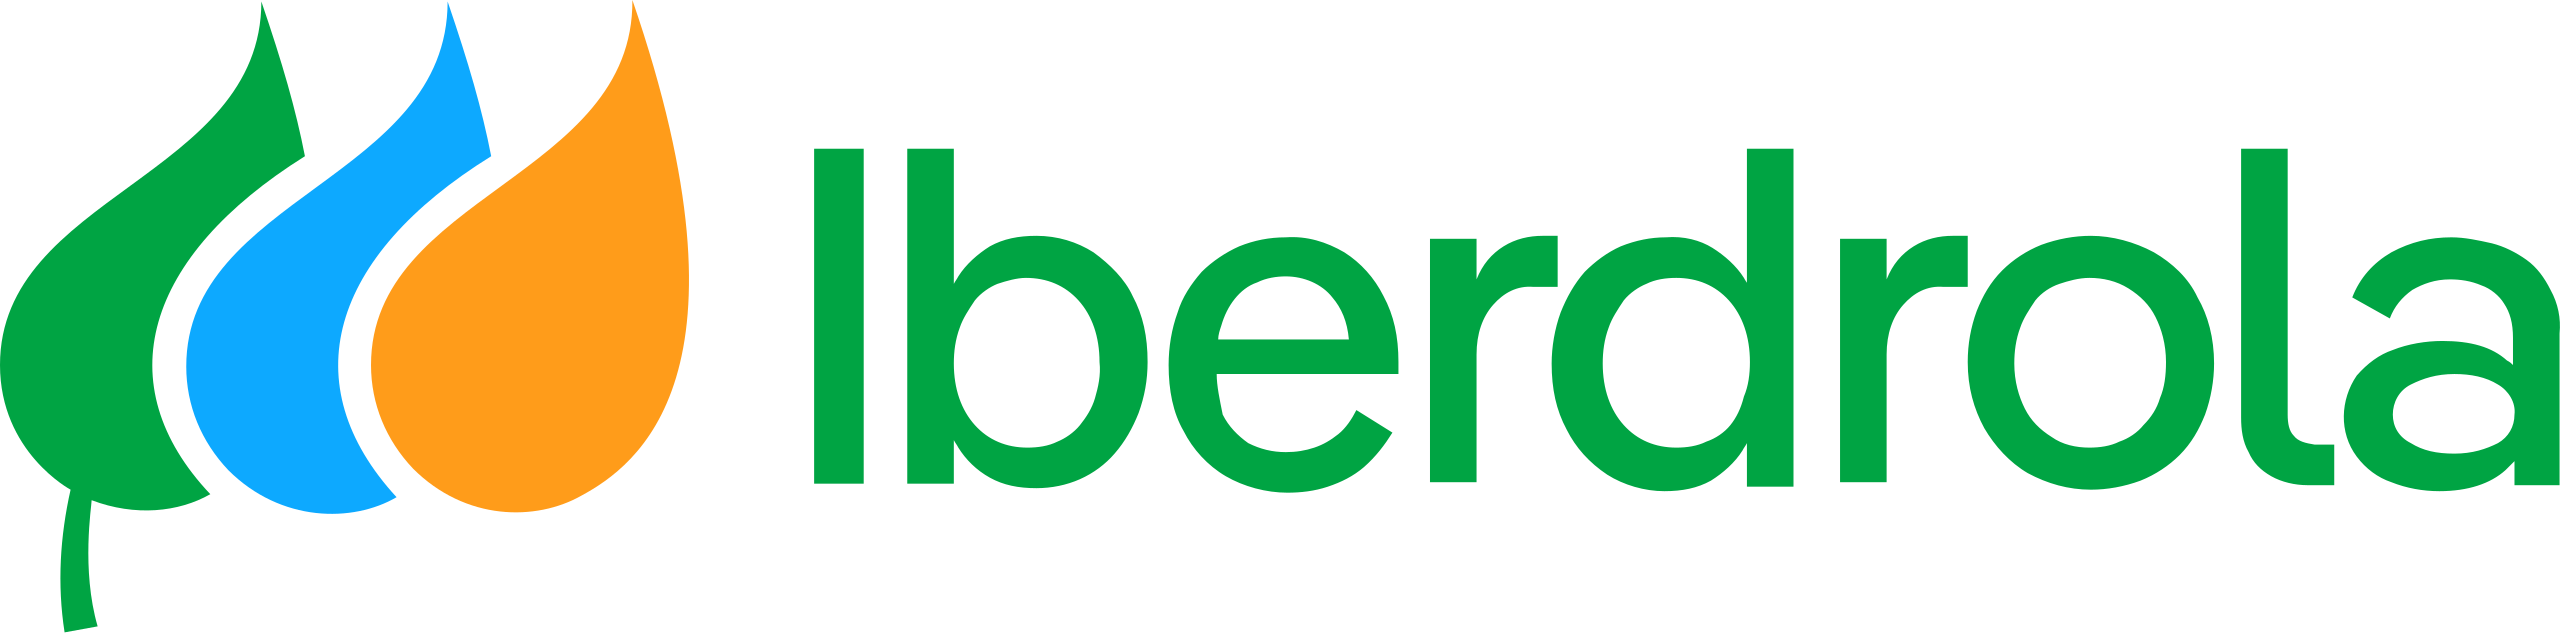 Iberdola_logo